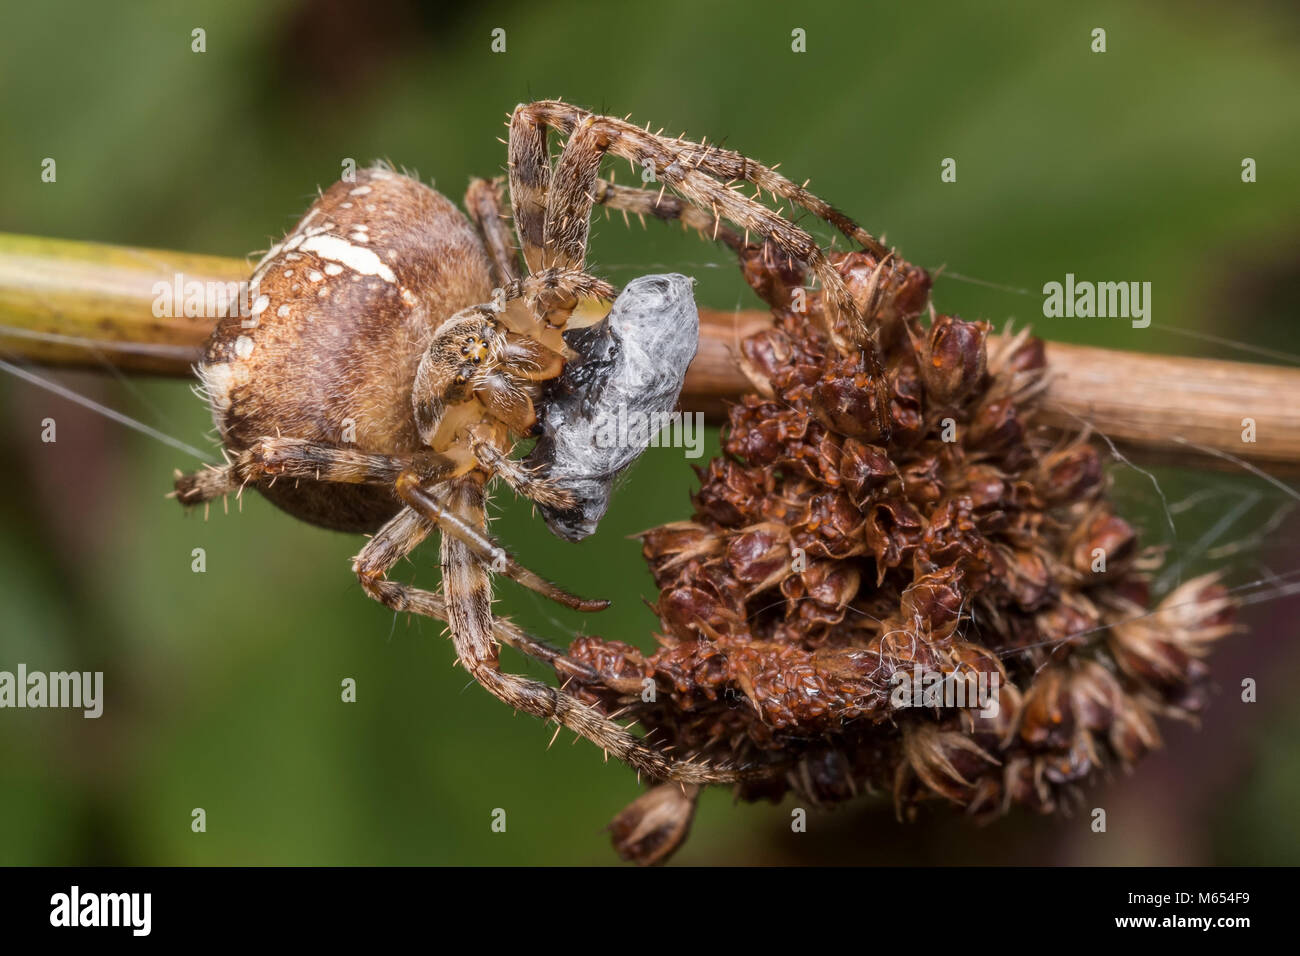 Giardino Spider (Araneus diadematus) su un impianto lo stelo con la sua preda avvolto. Tipperary, Irlanda Foto Stock